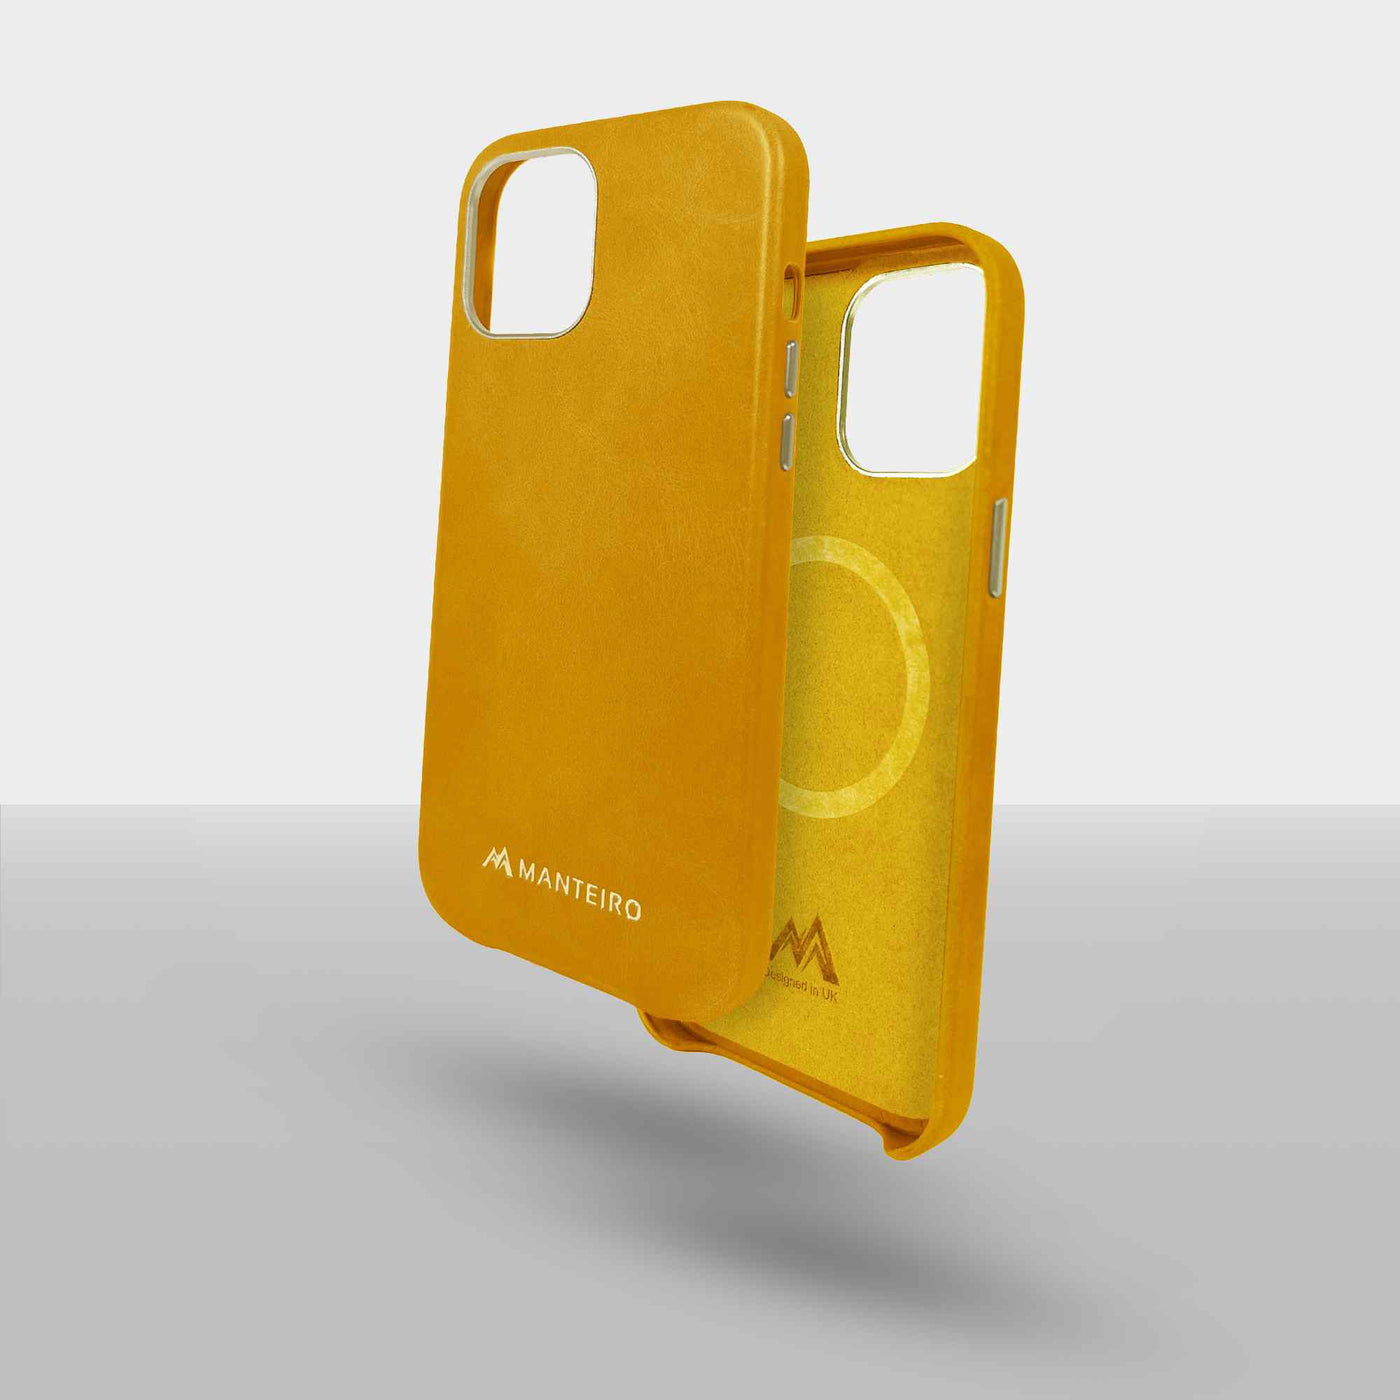 Classic Leather iPhone 12 Pro Max Case in Sandcastle #color_sandcastle